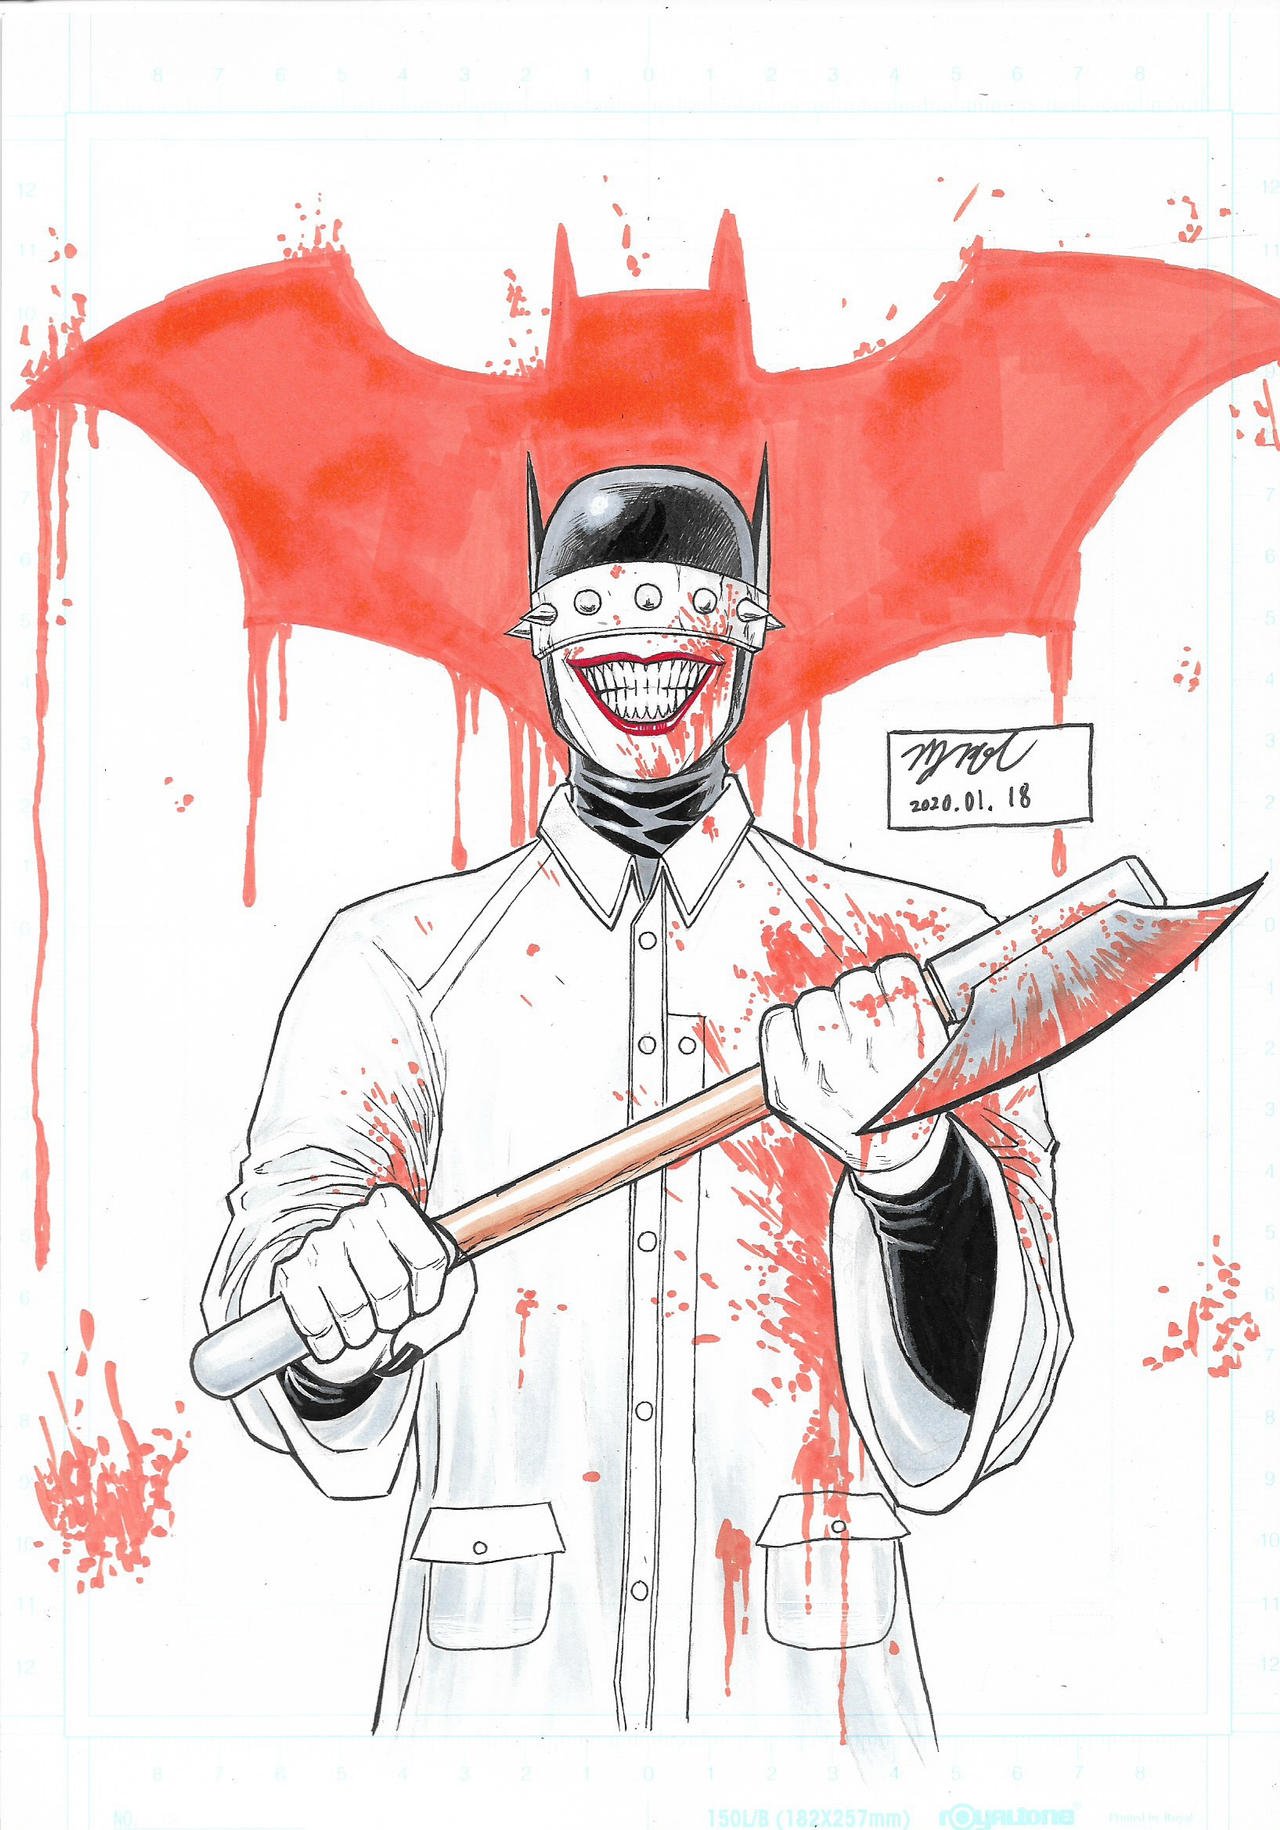 Patrick Bateman-The Batman Who Laughs by KyoungInKim on DeviantArt